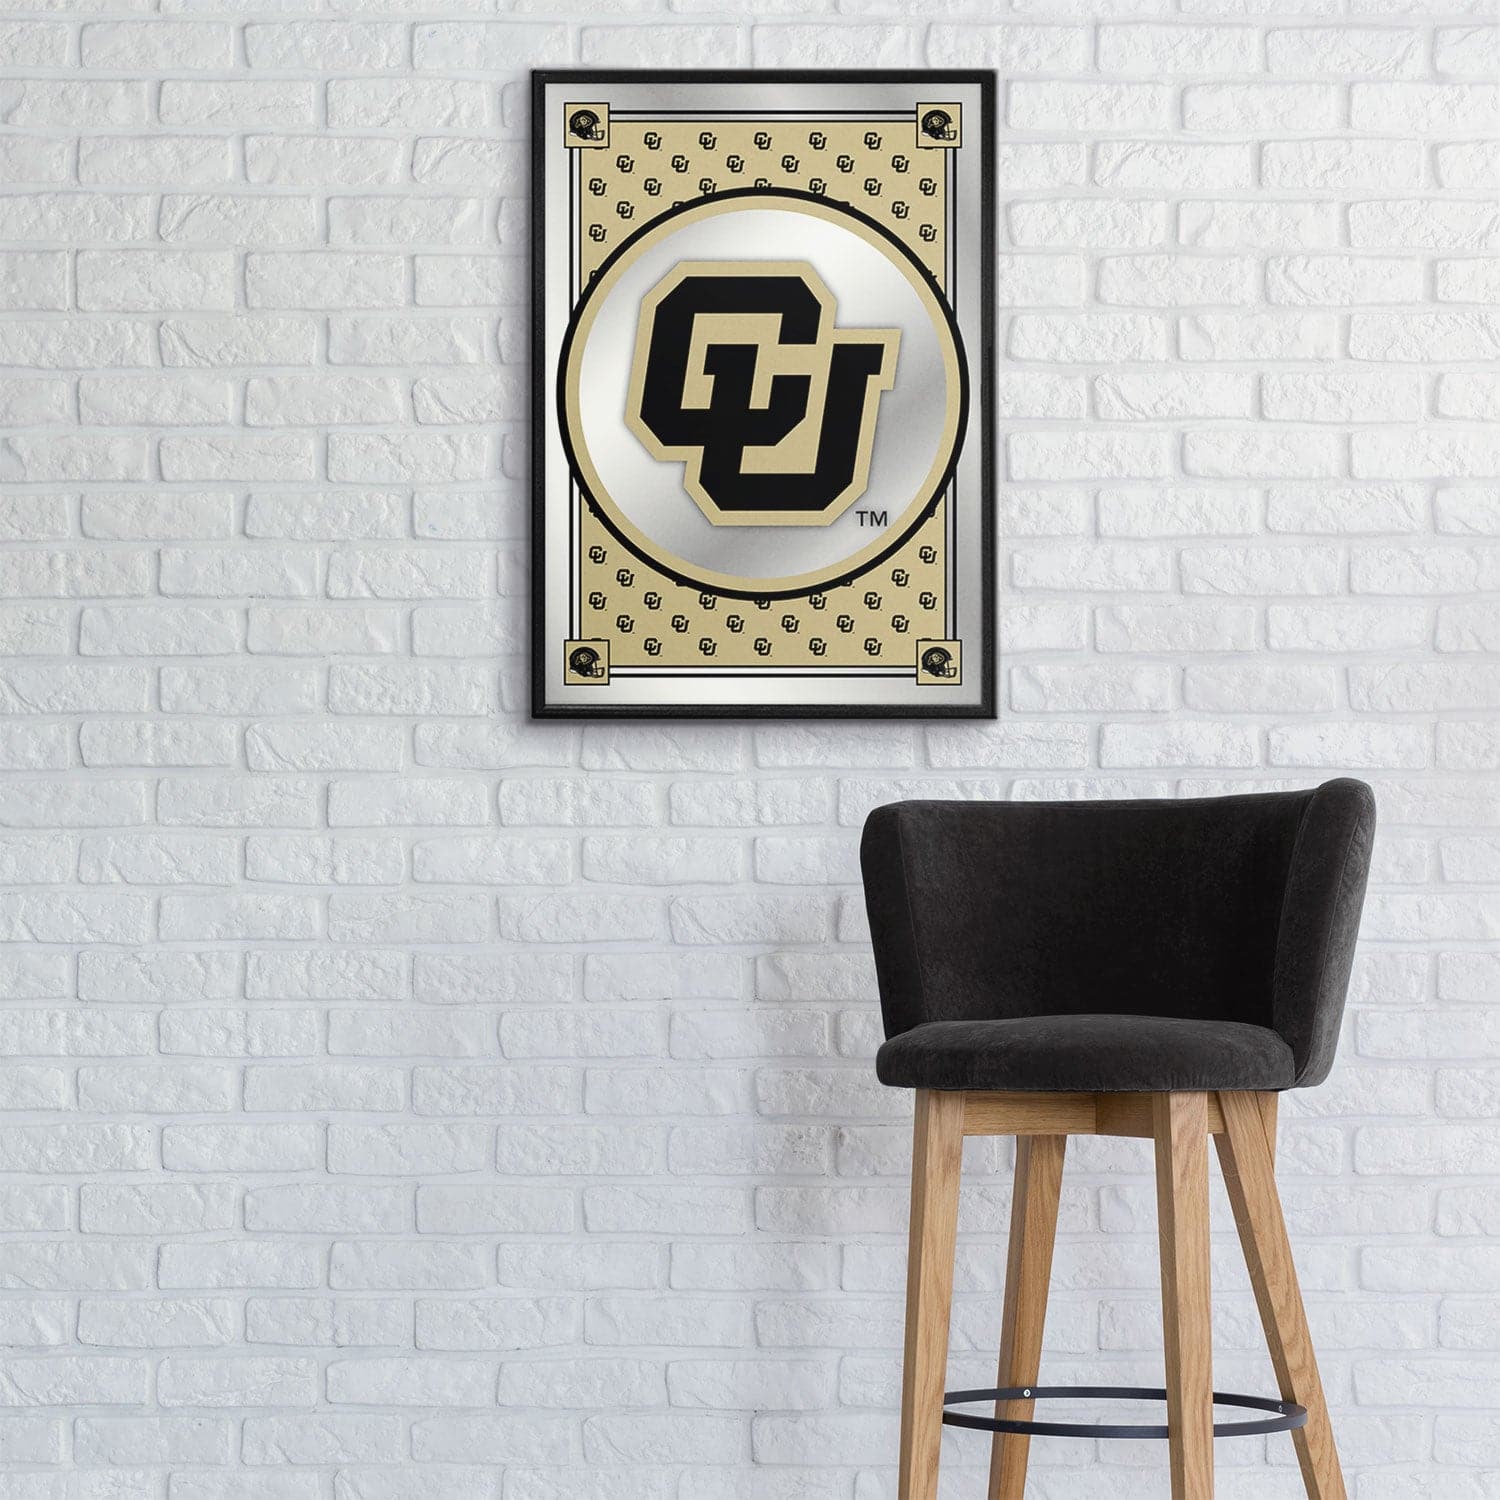 Colorado Buffaloes: Team Spirit, CU - Framed Mirrored Wall Sign - The Fan-Brand